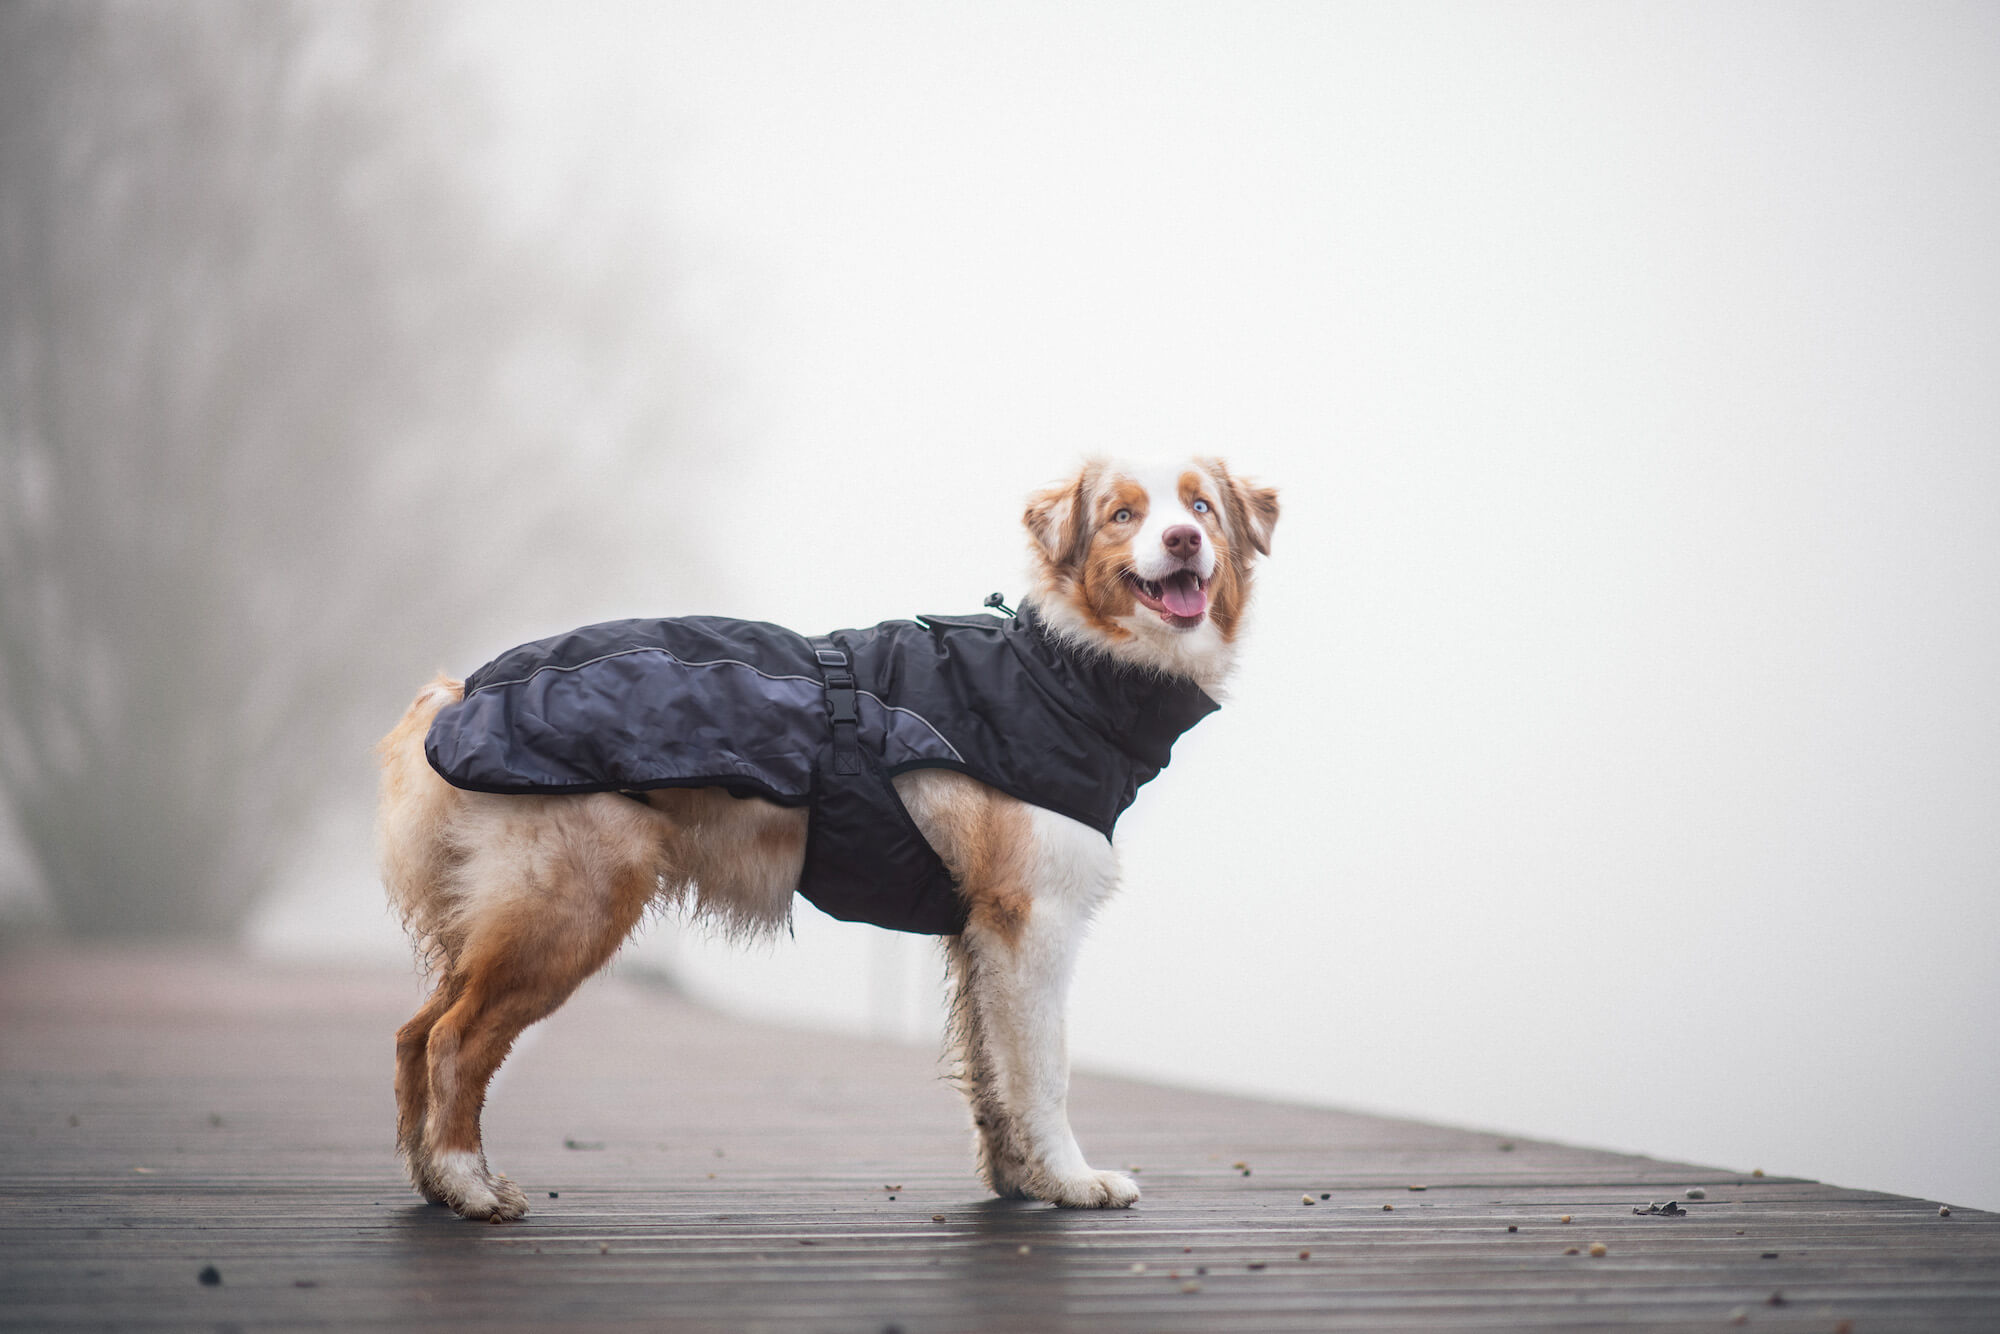 Vsepropejska Rosko zateplená bunda pro psa Barva: Černá, Délka zad (cm): 53, Obvod hrudníku: 68 - 72 cm